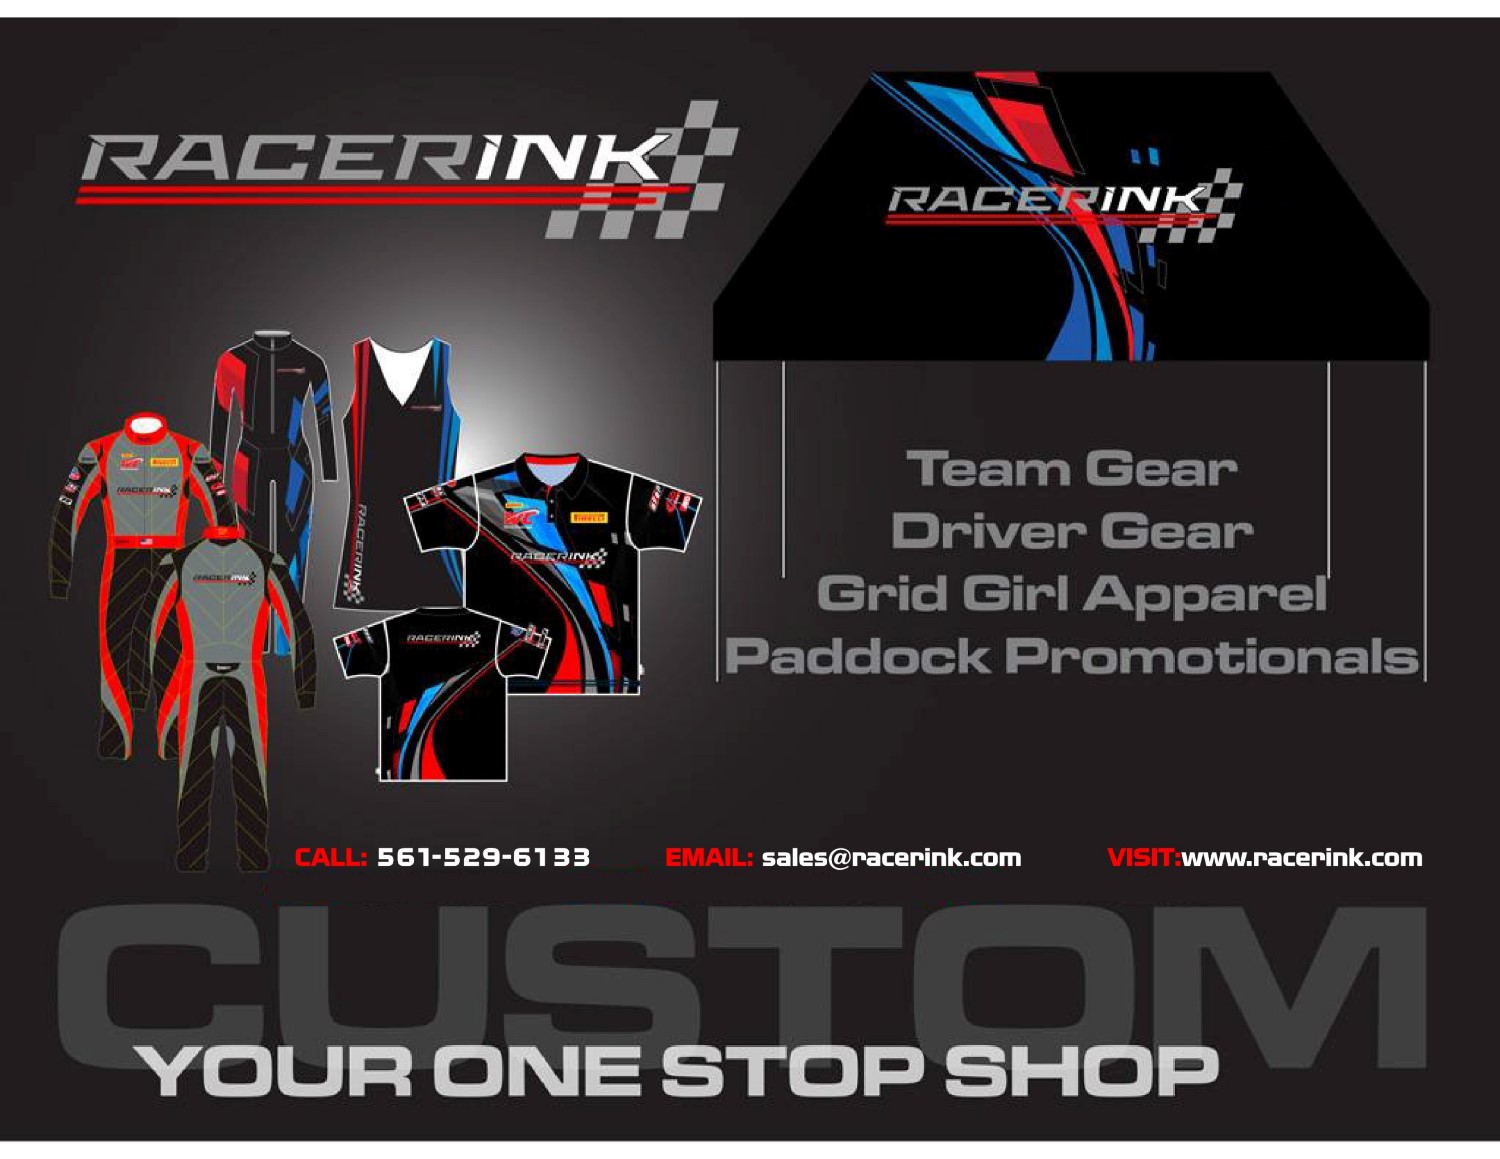 RacerInk Joins the Road to Indy – AutoRacing1.com